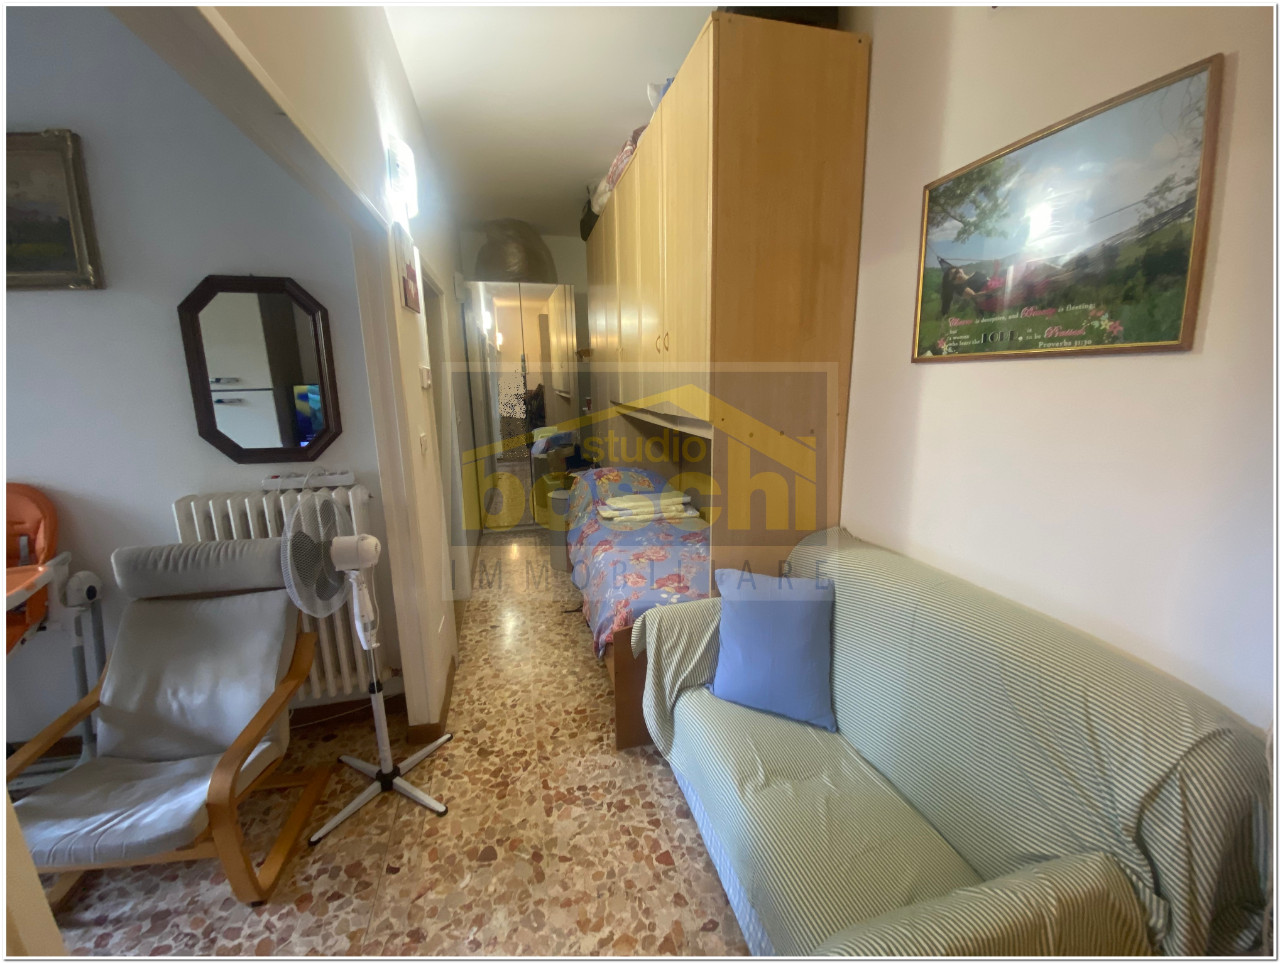 Vendita - Appartamento - Saffi - Bologna - € 155.000